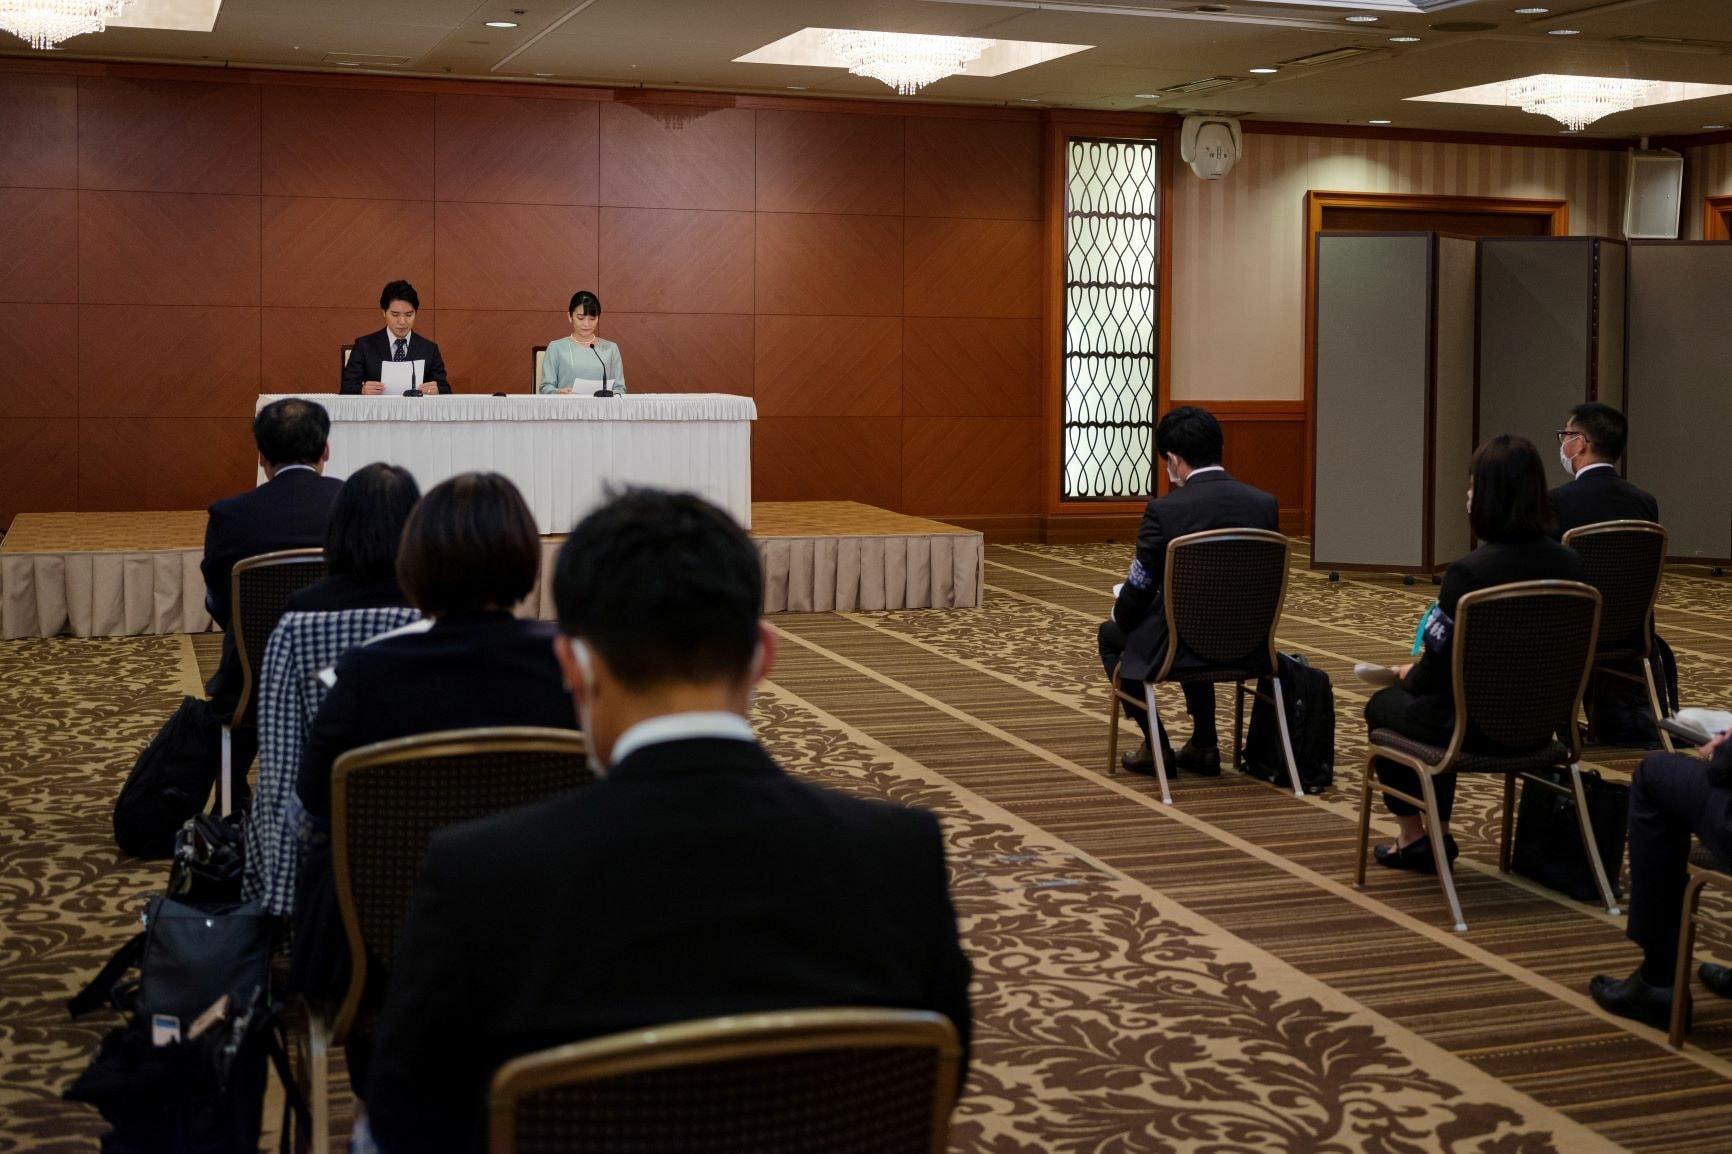 Kei Komuro et Mako d'Akishino lors de leur conférence de presse @Getty